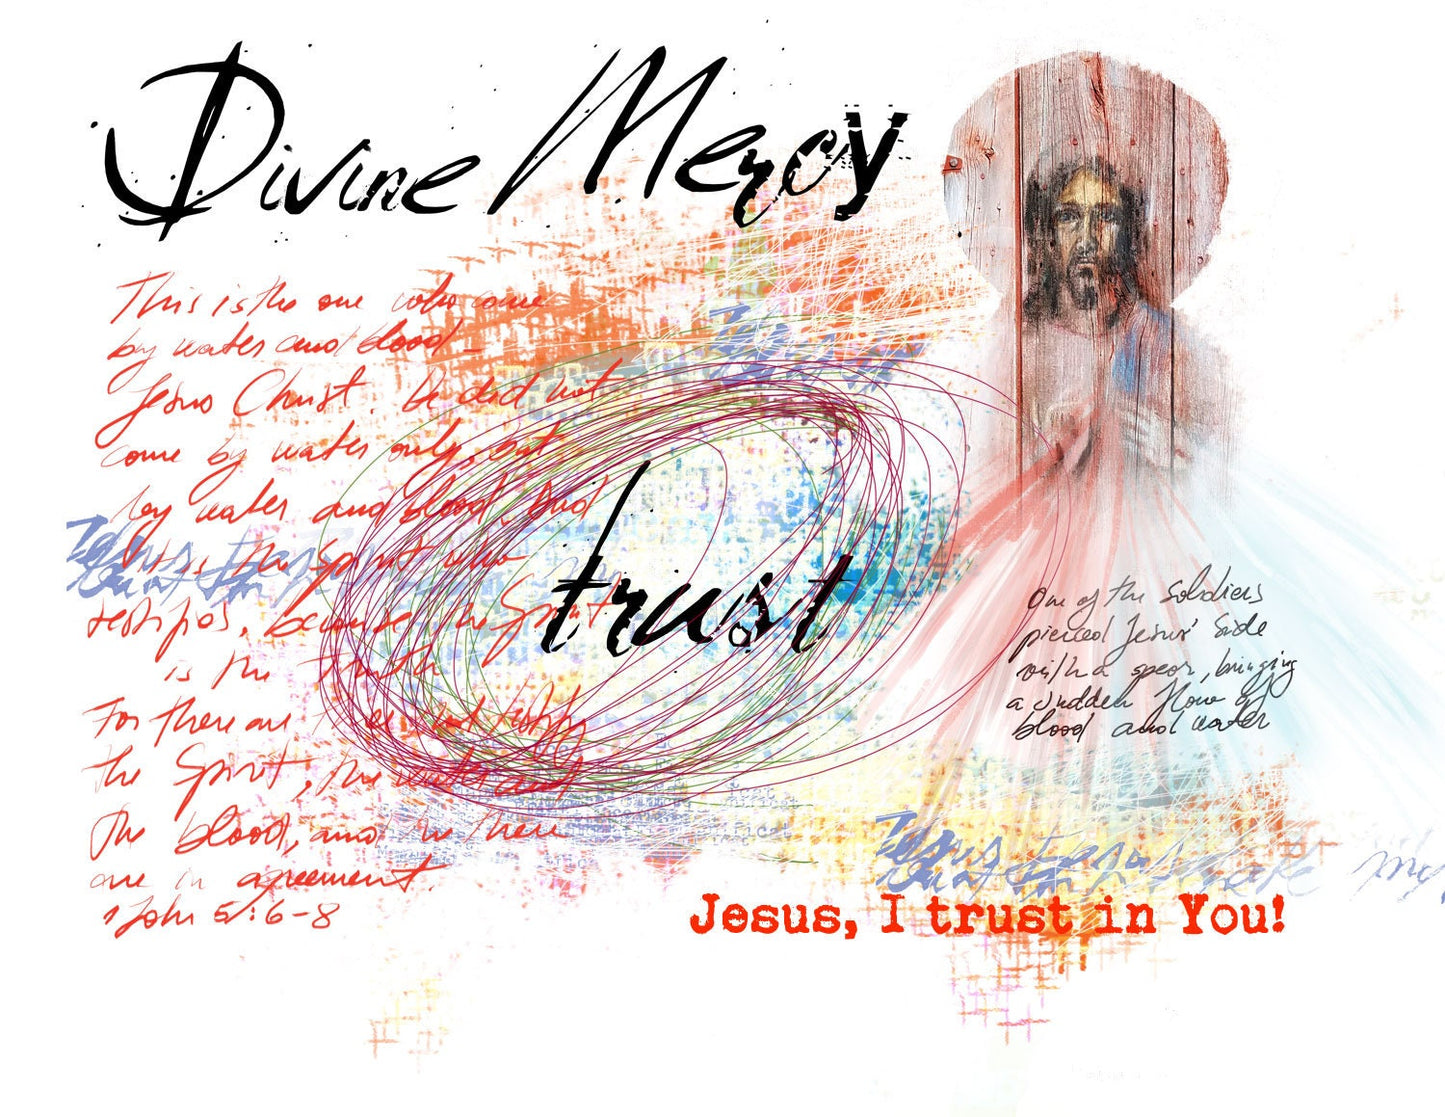 Divine Mercy bible journaling elements - digital download